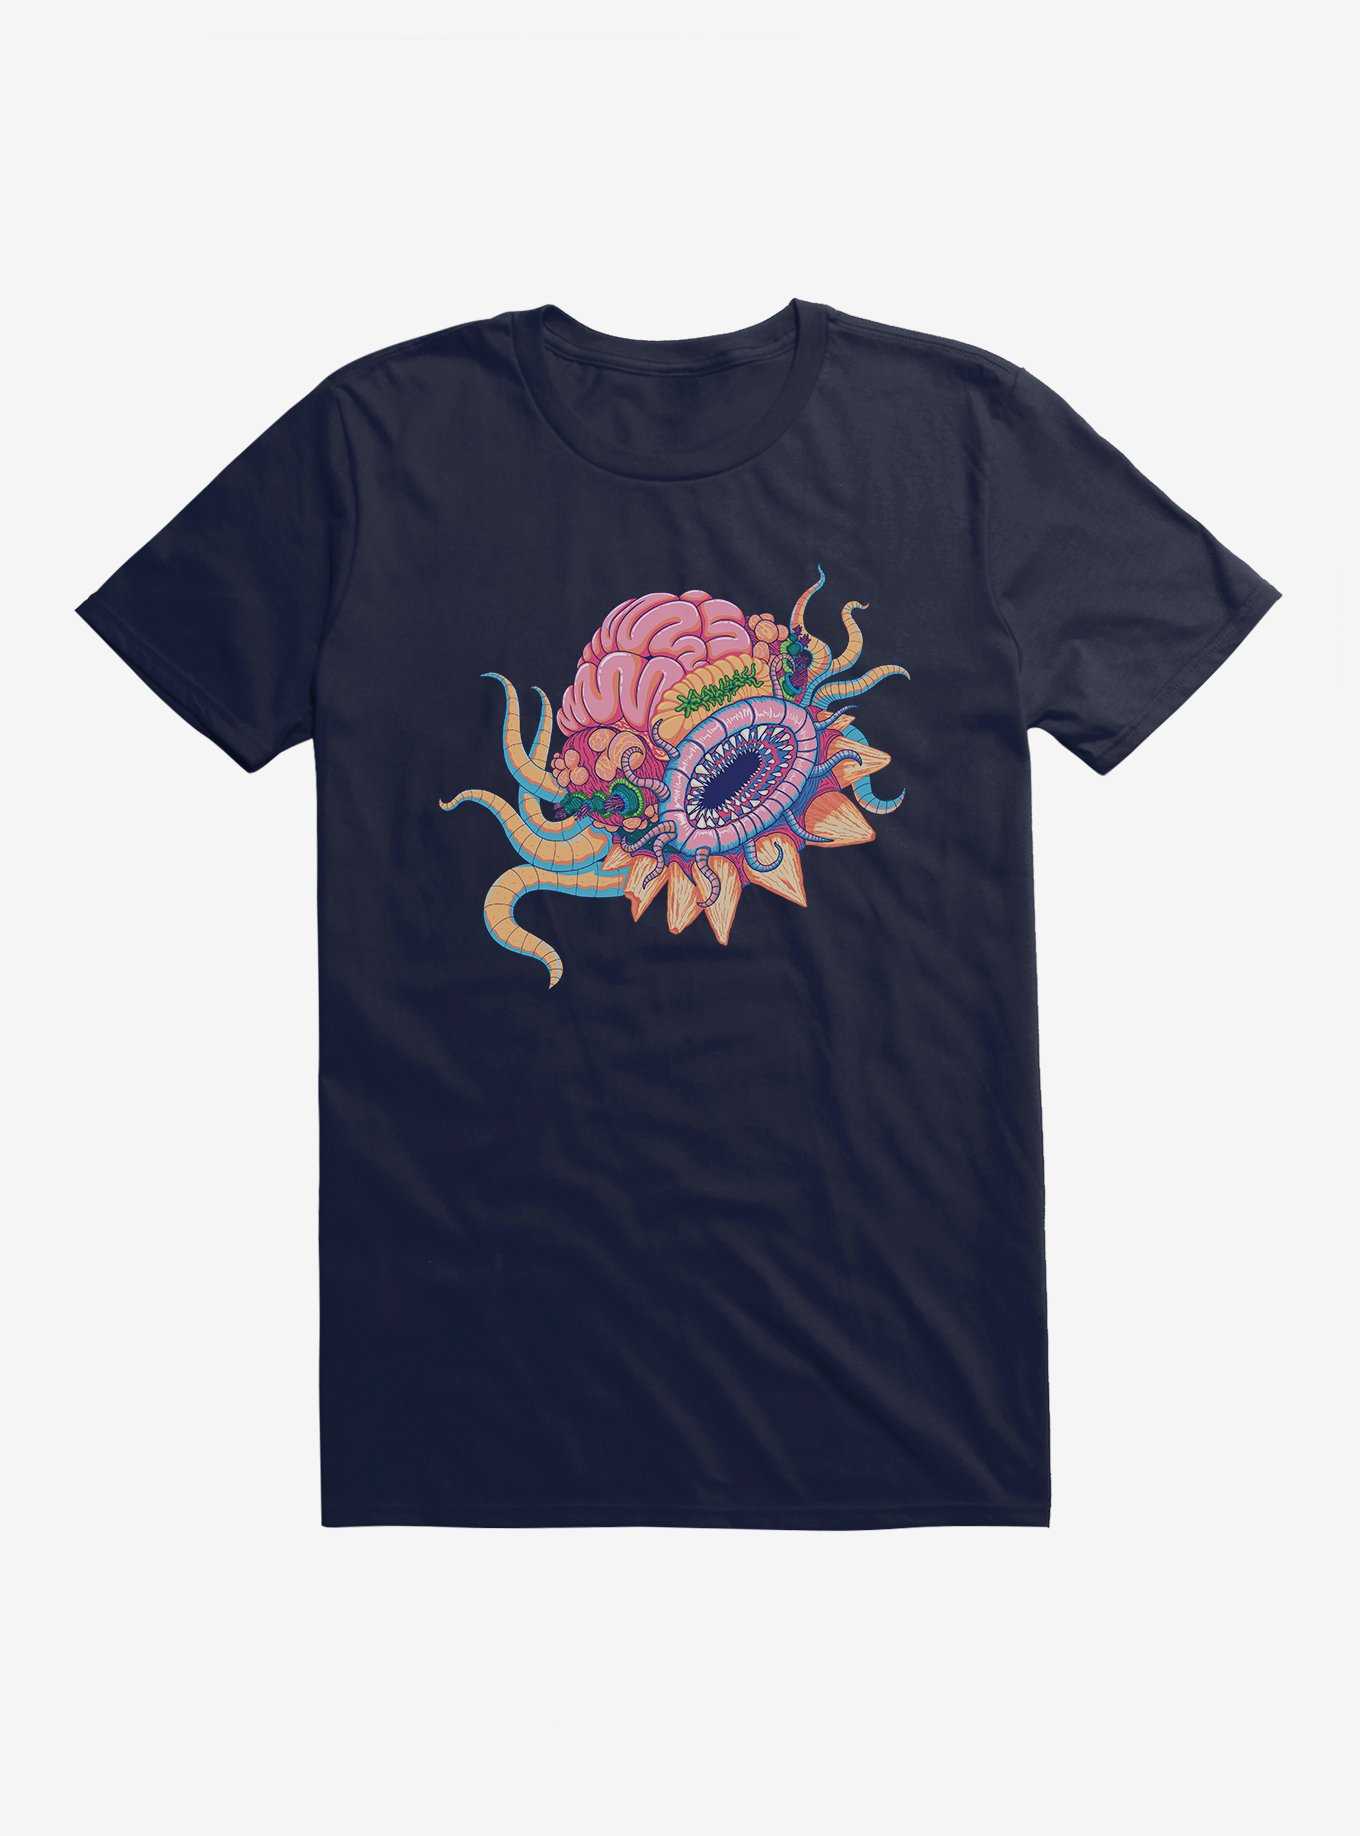 Rick And Morty Brain Monster T-Shirt, , hi-res